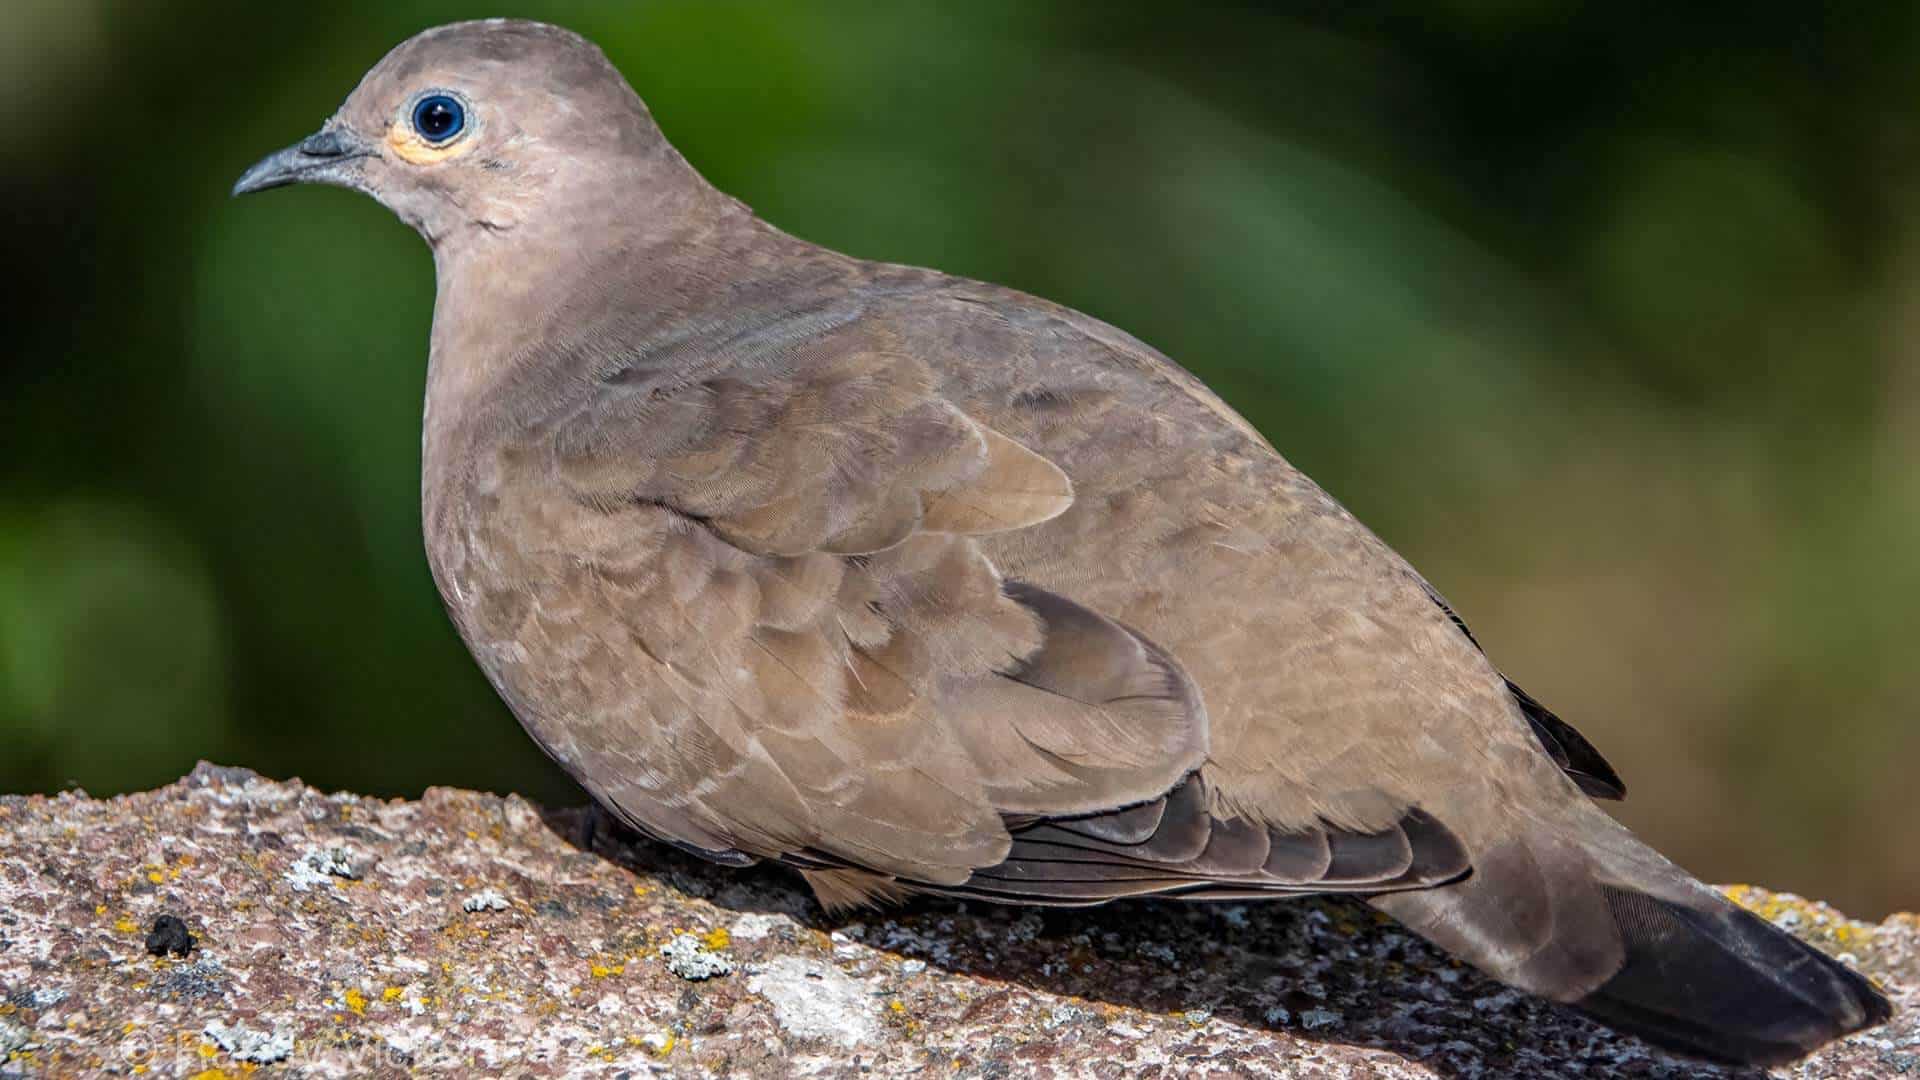 antisana reserve dove spotted on ecuador bird watching tour